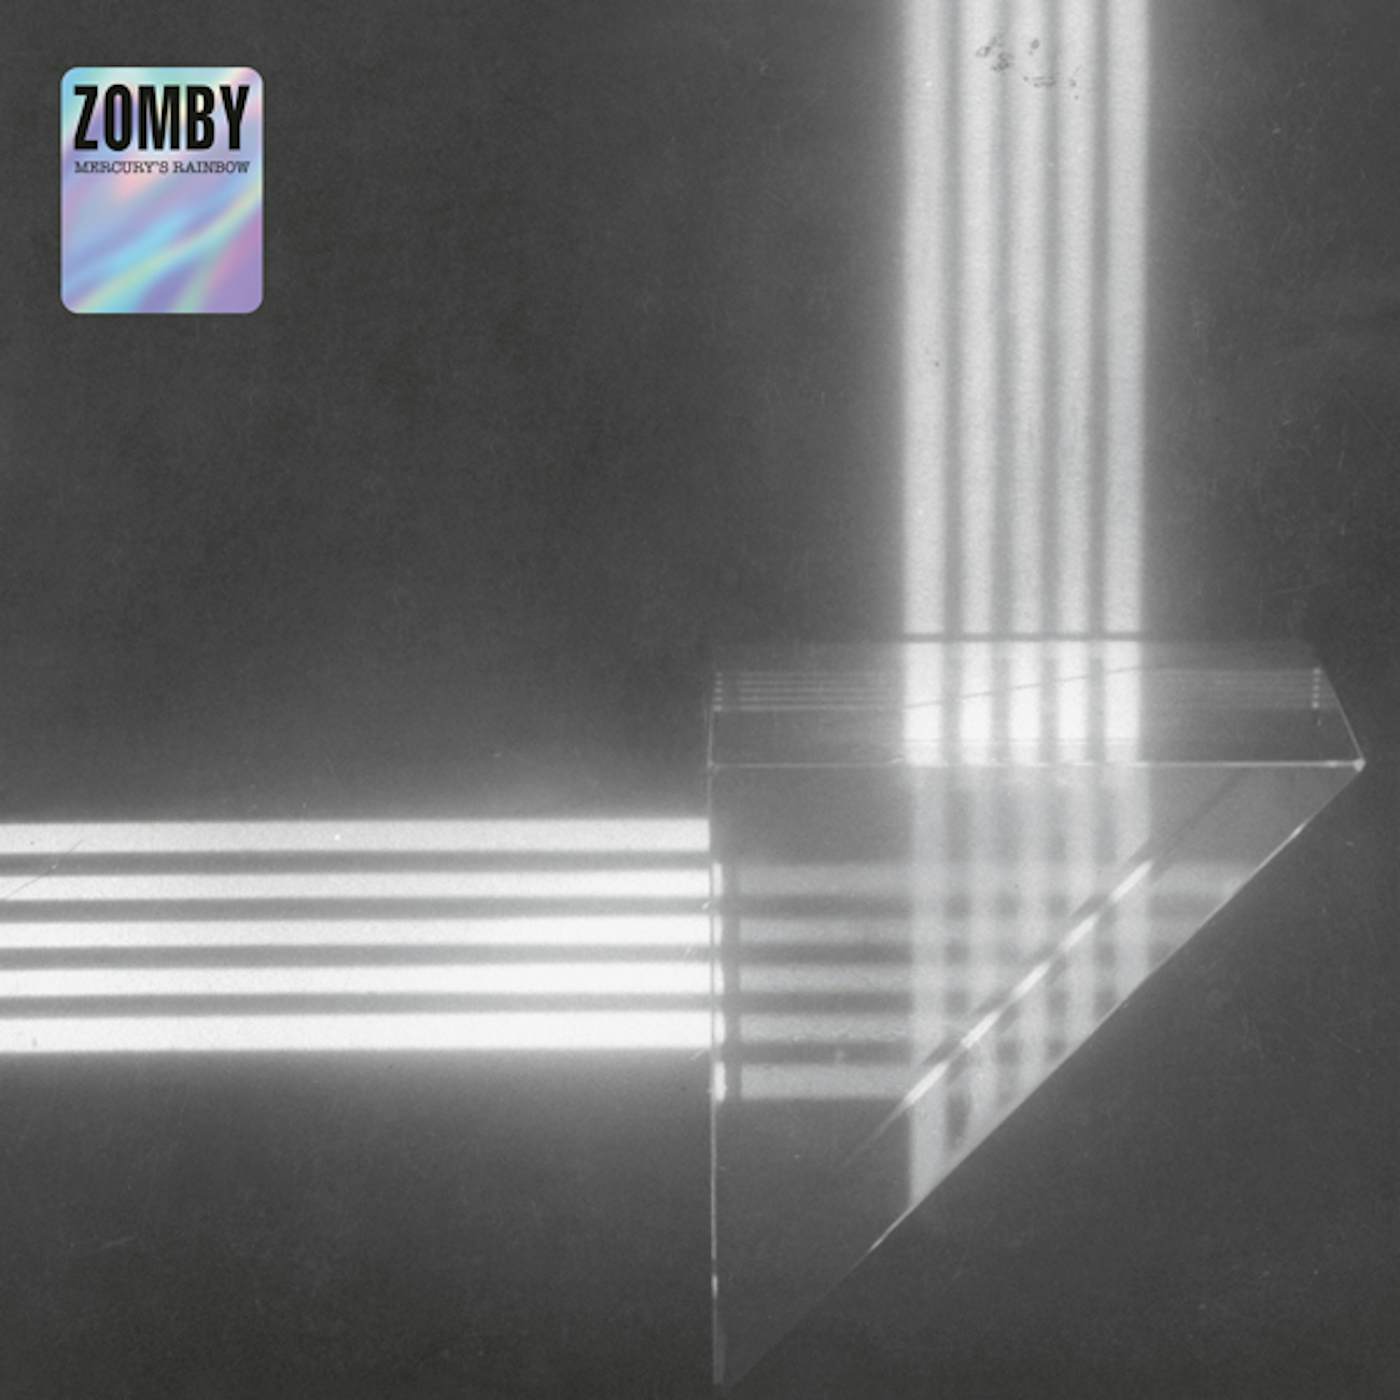 Zomby Mercury's Rainbow Vinyl Record